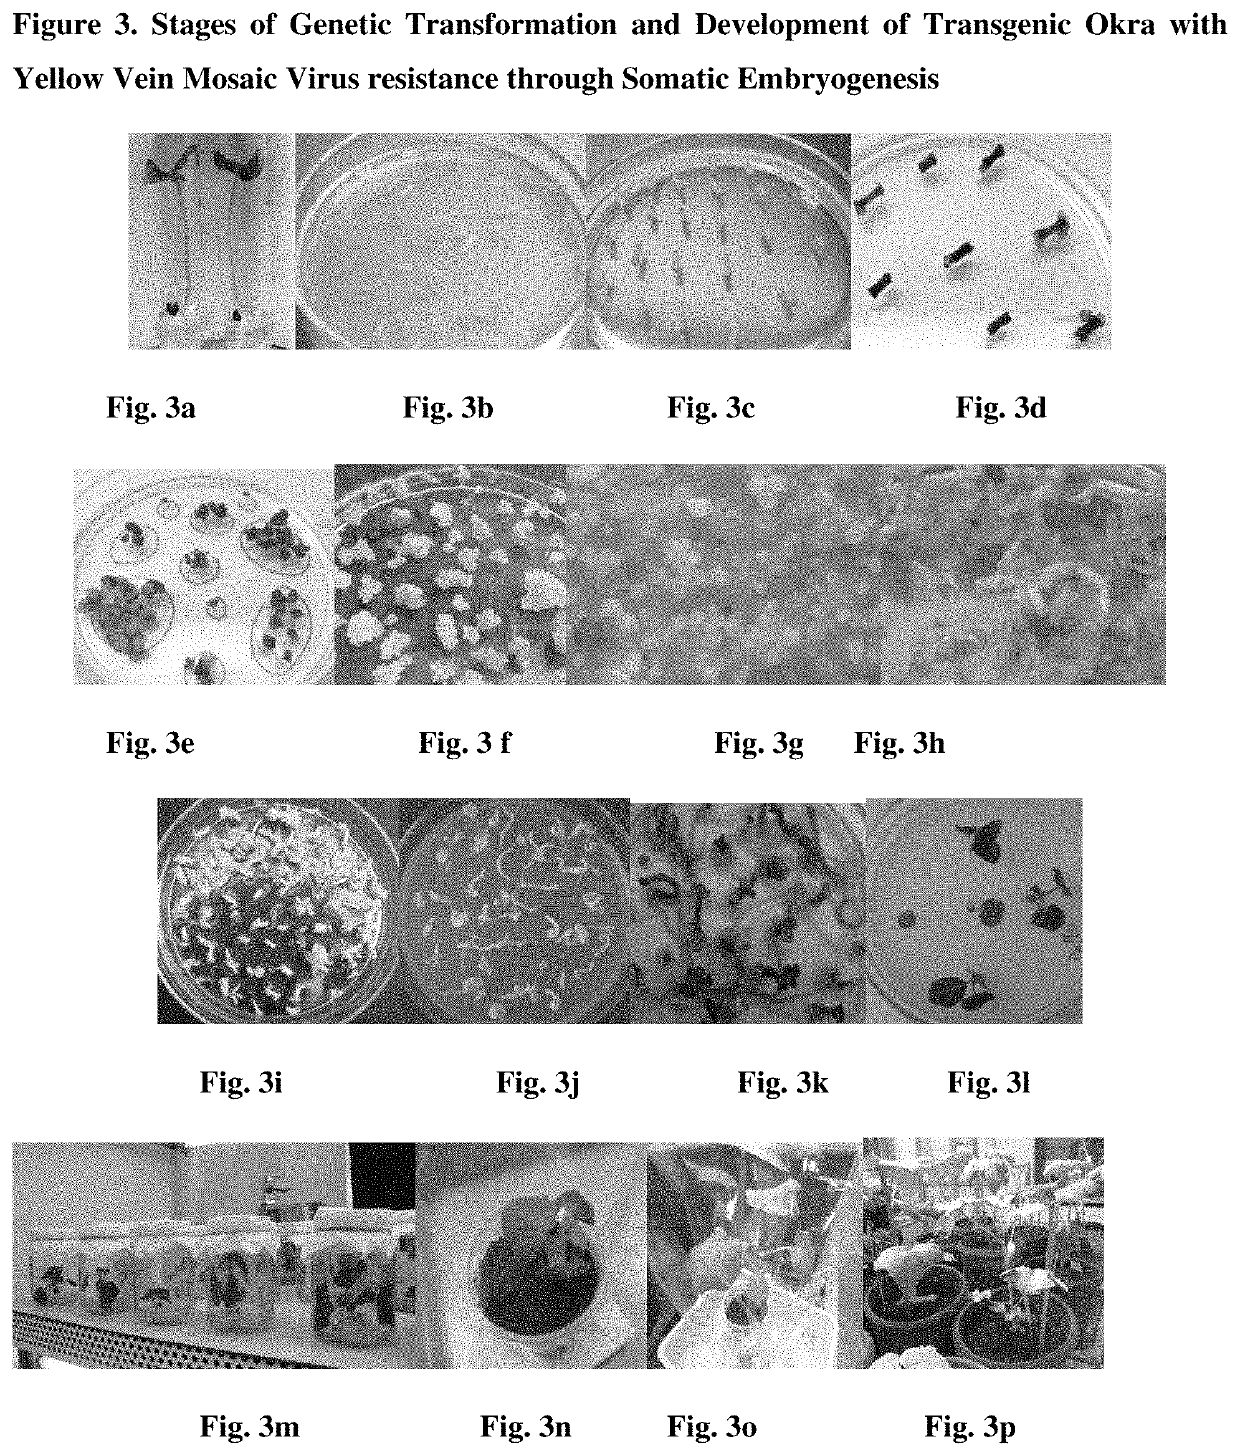 Regeneration and genetic transformation of okra through somatic embryogenesis